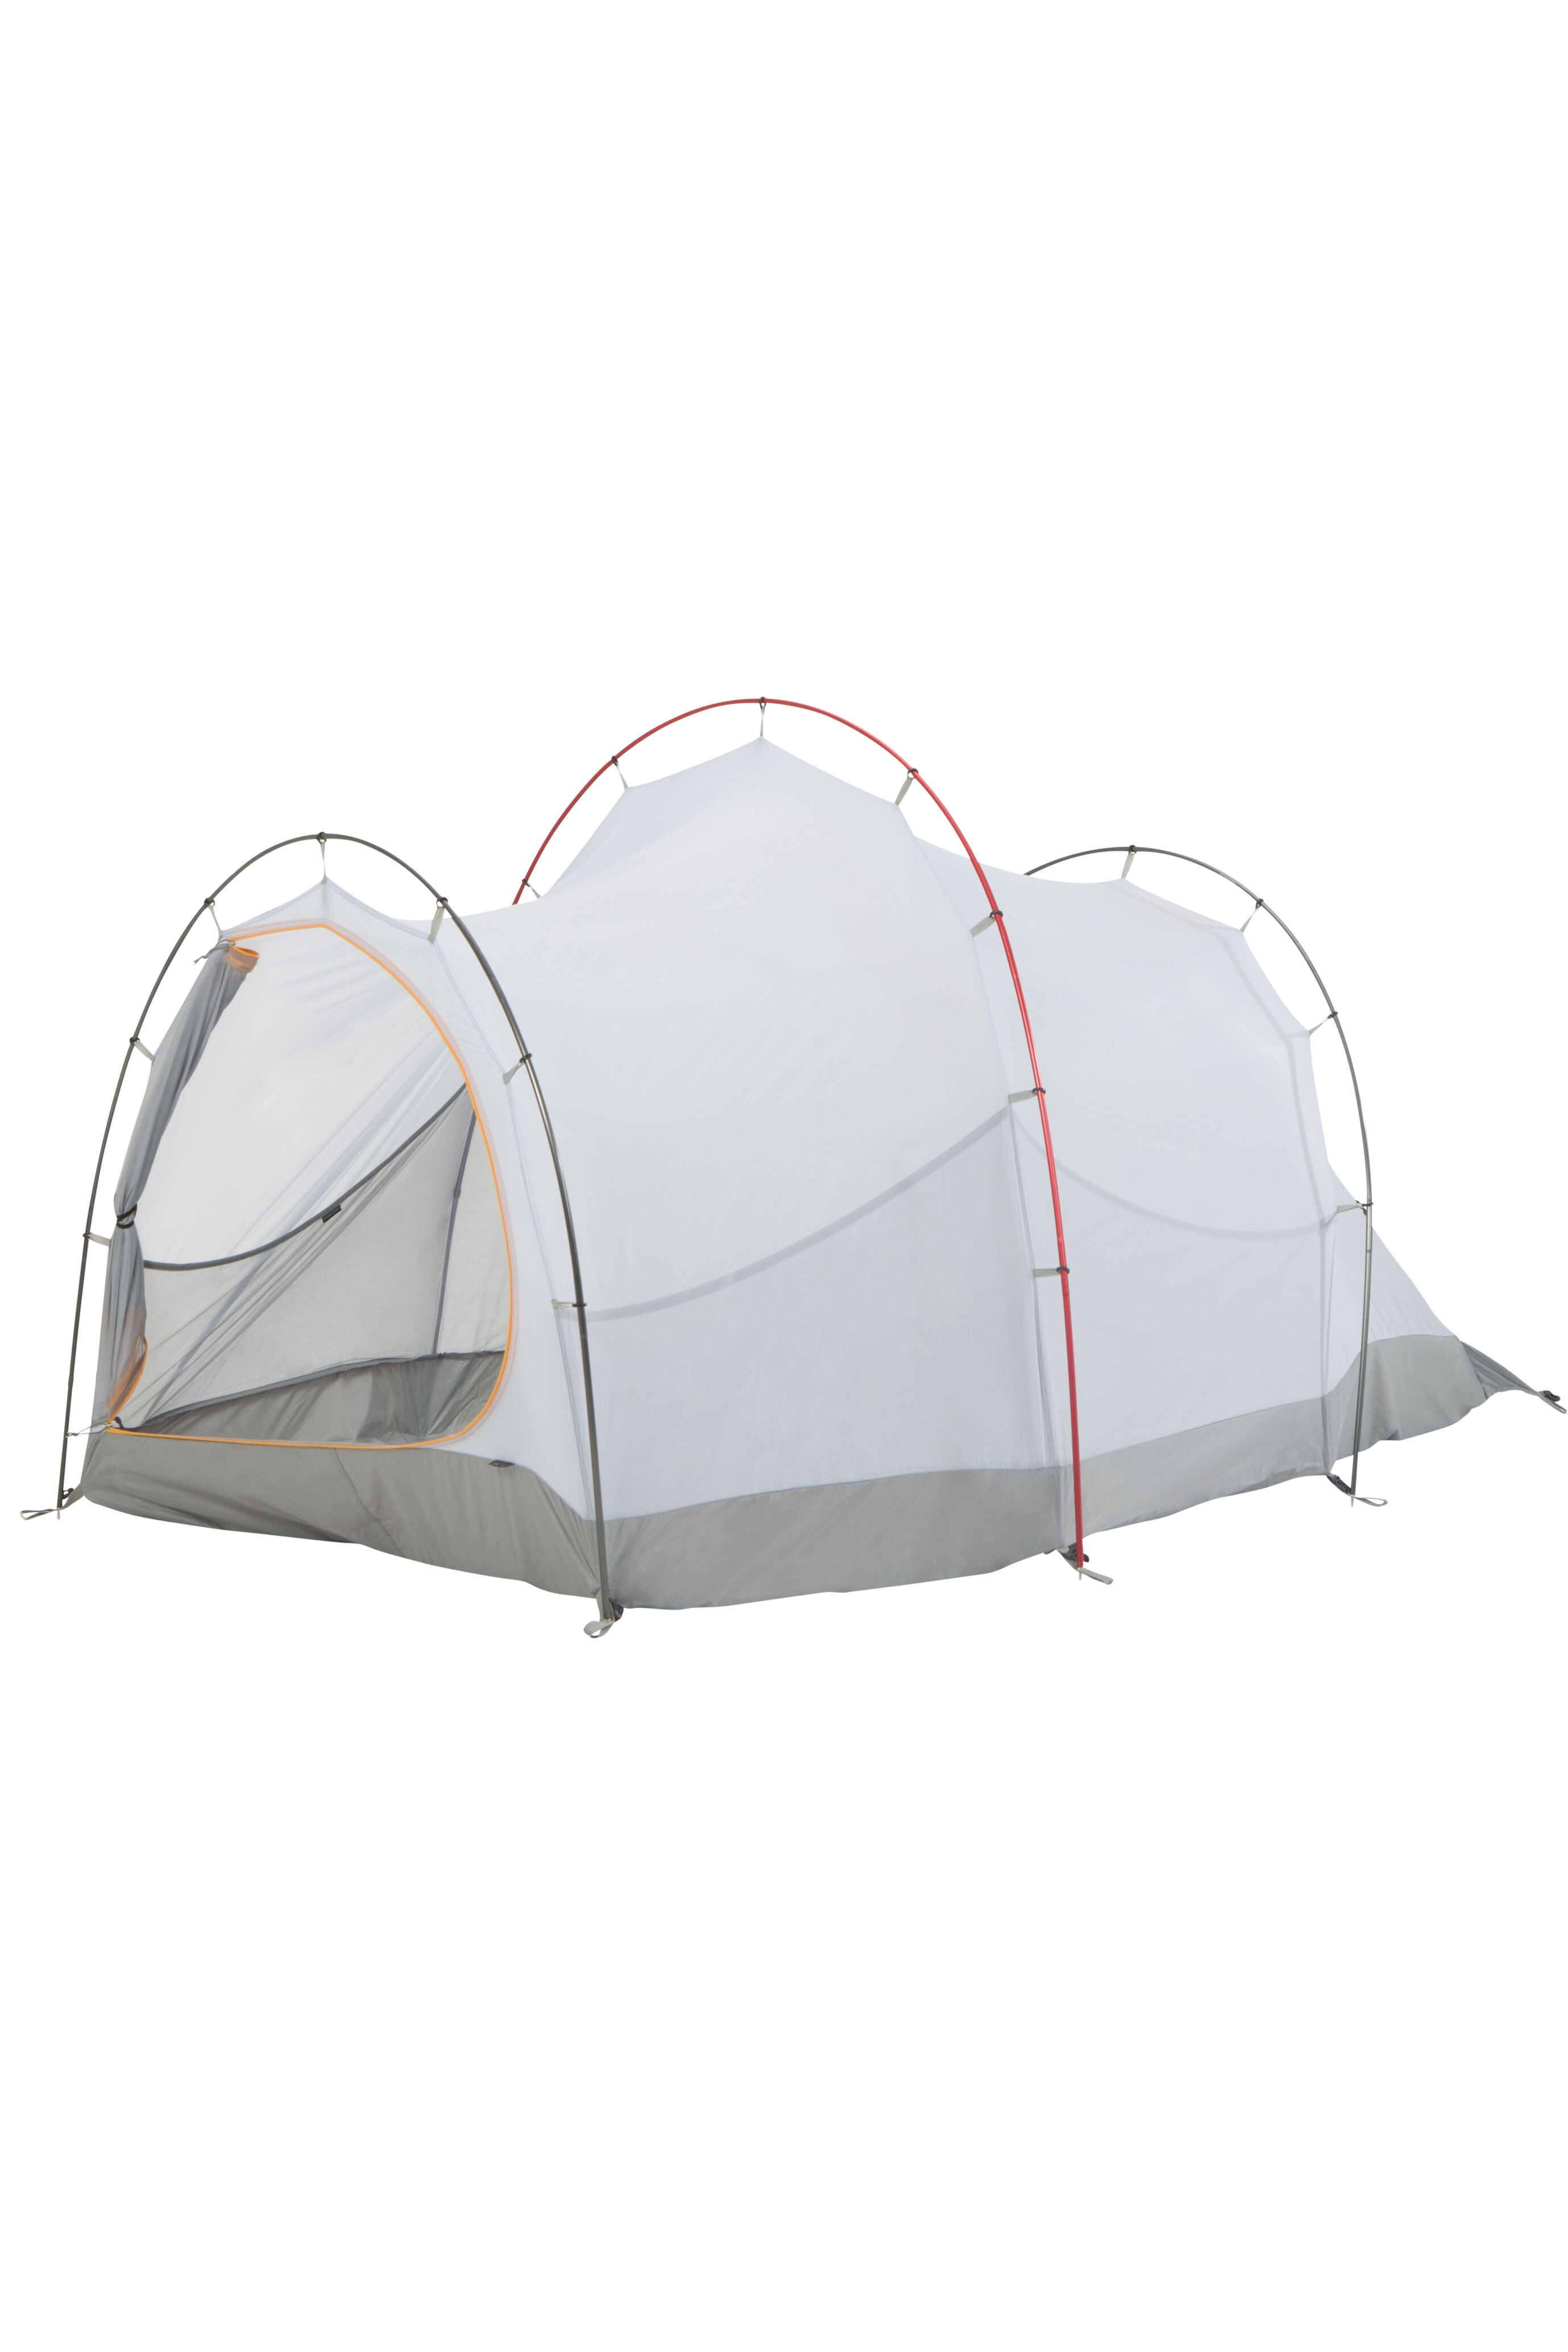 alpine design tent asymmetric orange